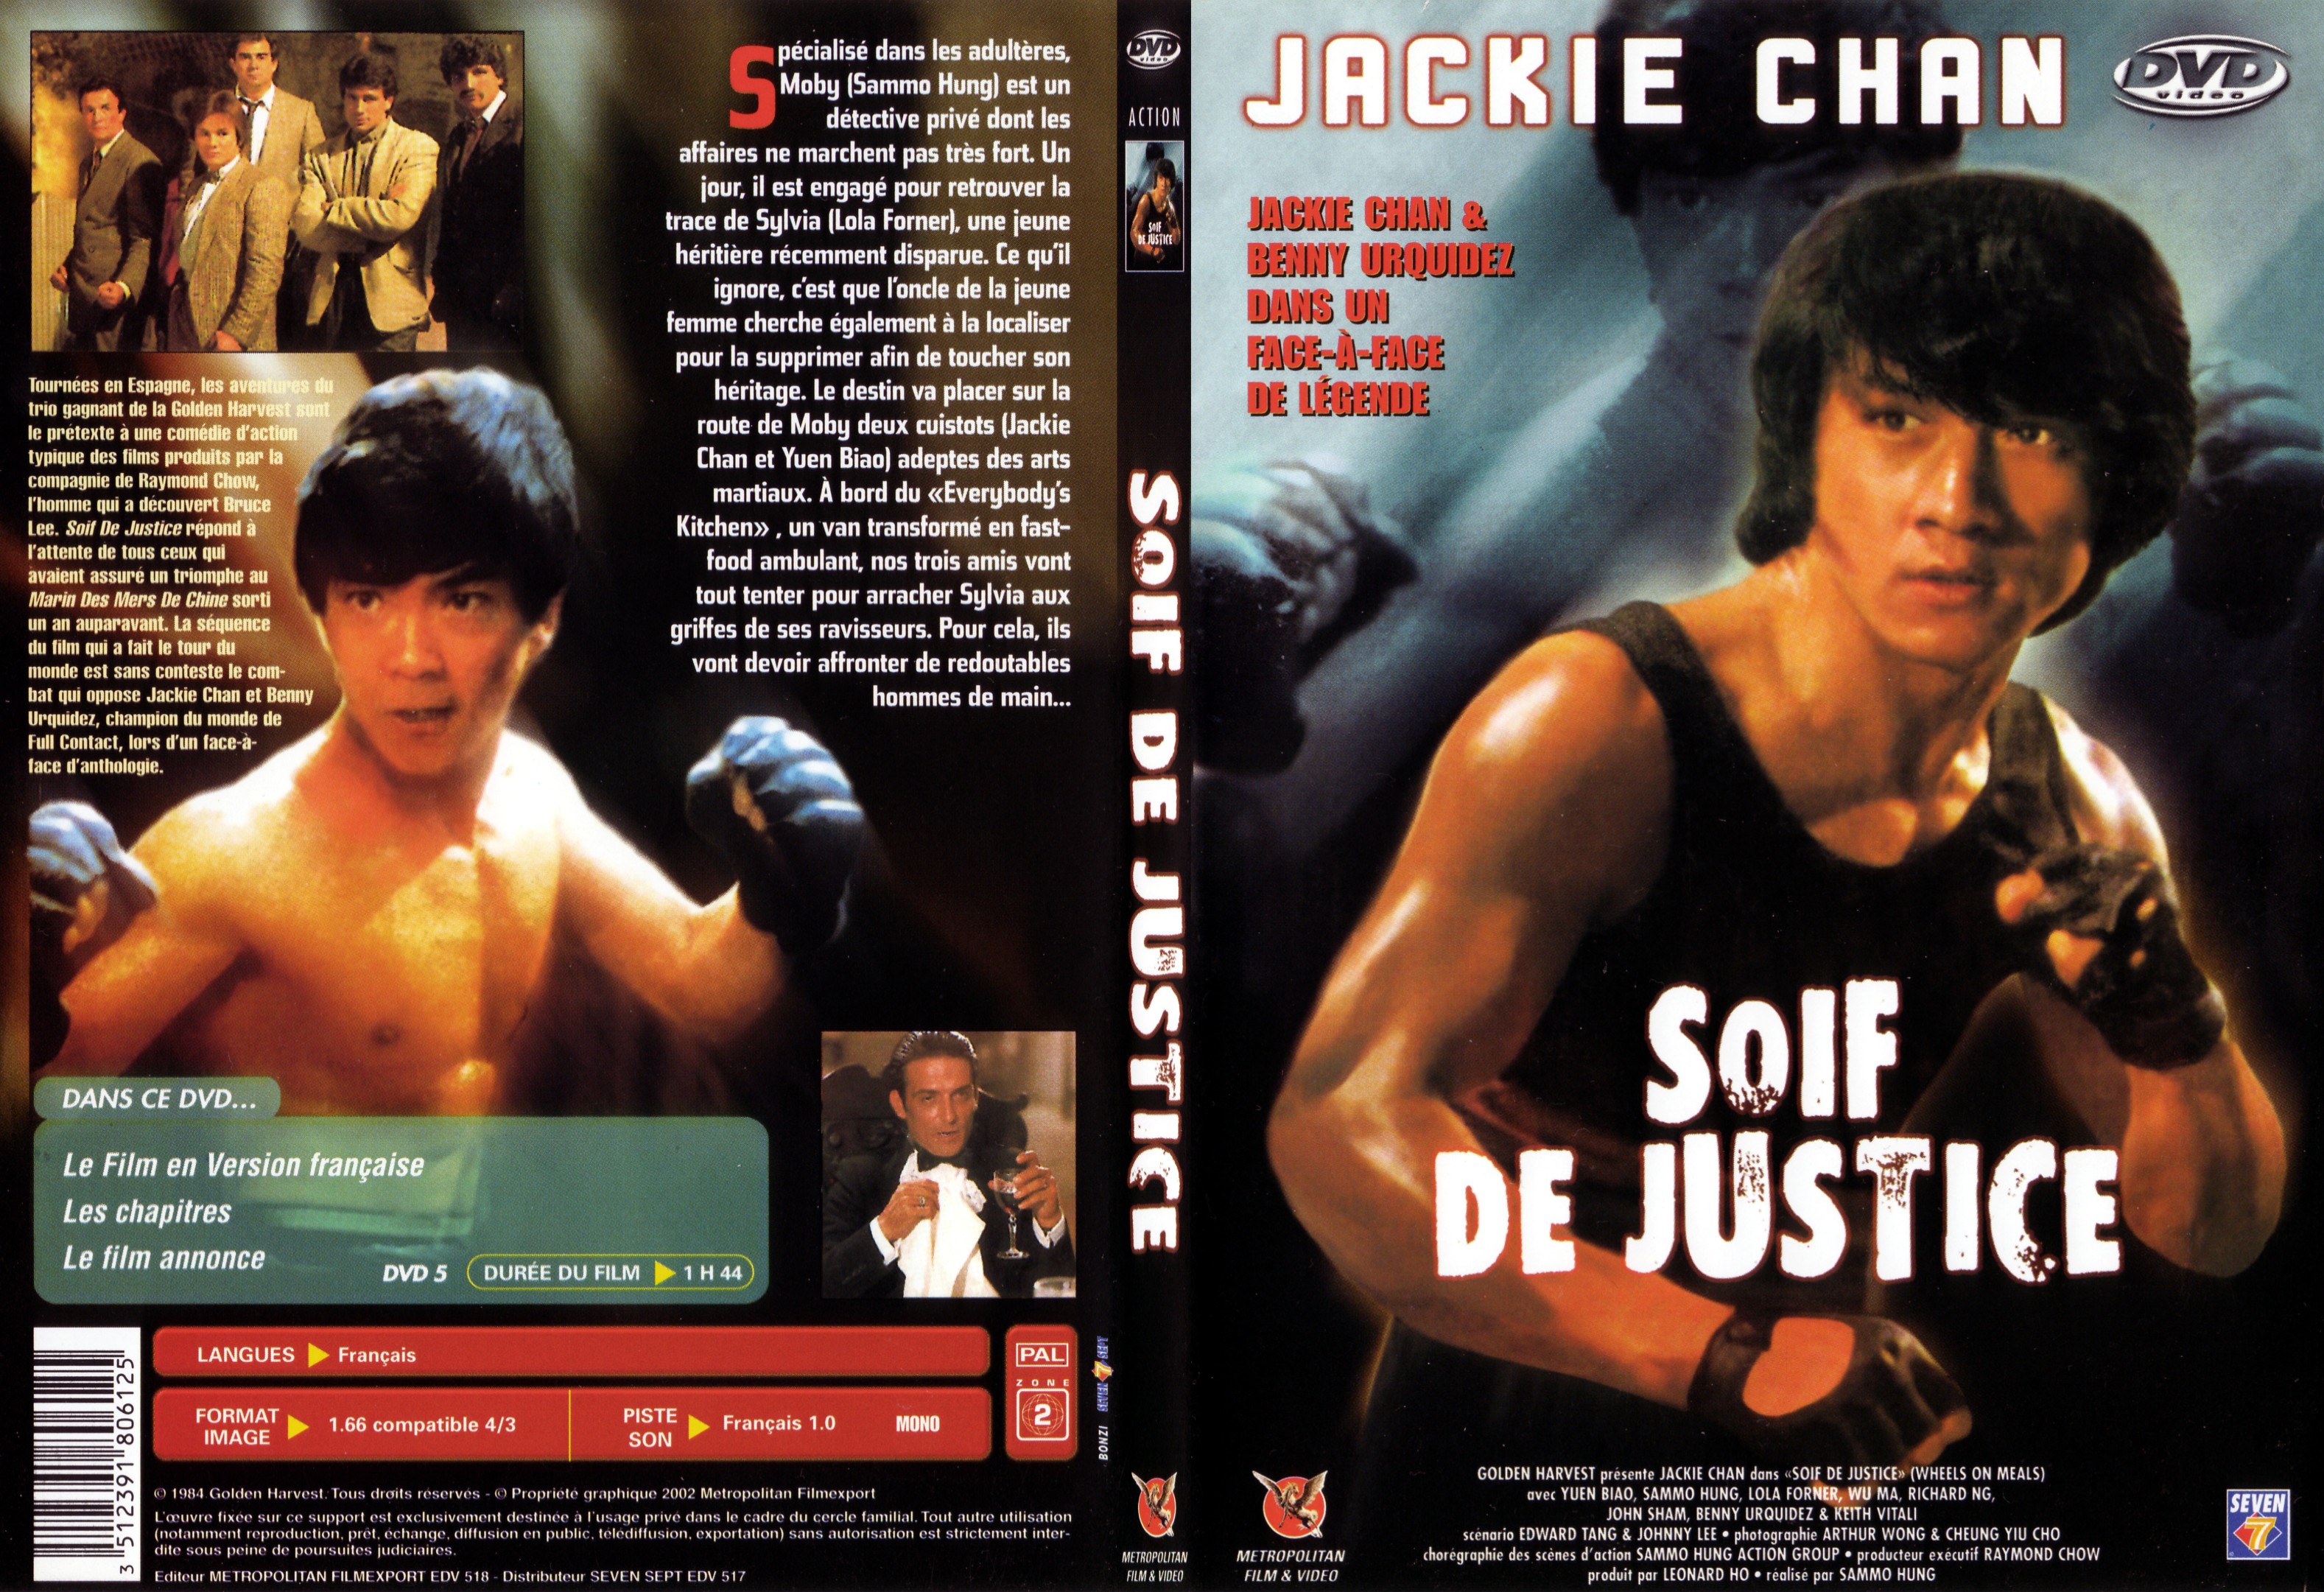 Jaquette DVD Soif de justice - SLIM